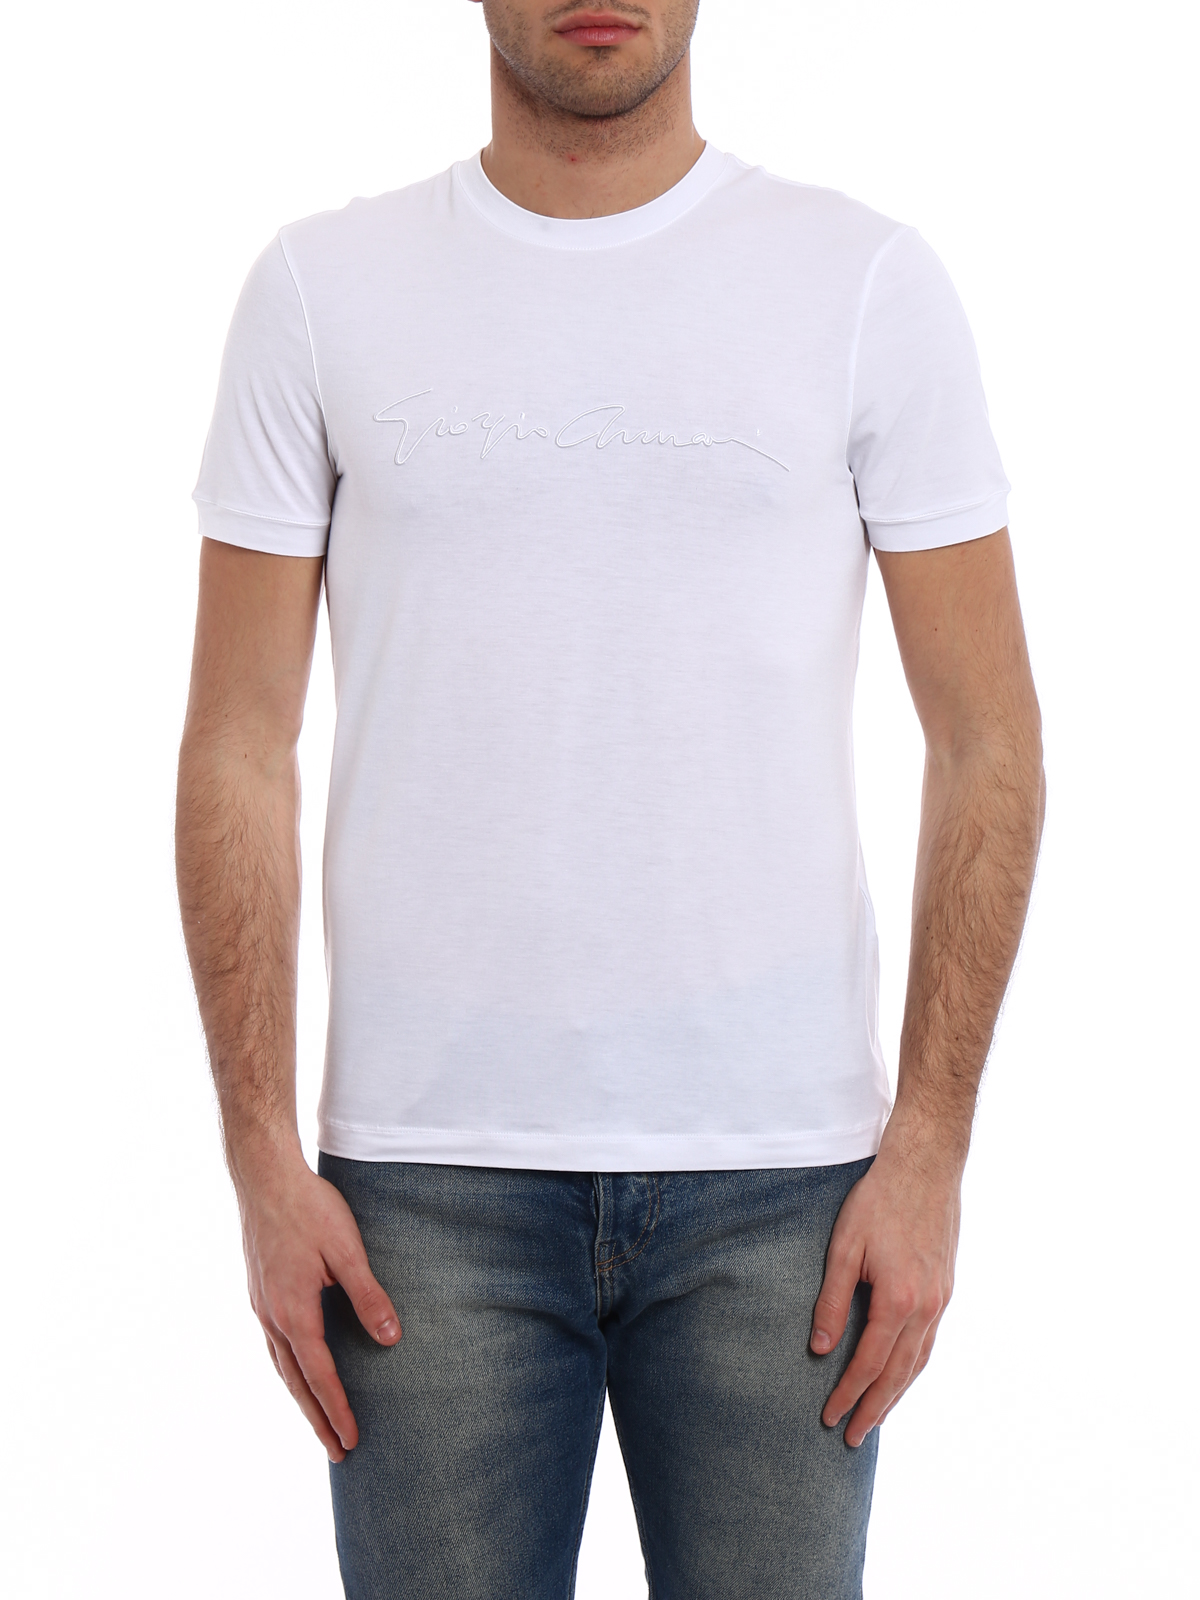 giorgio armani white t shirt